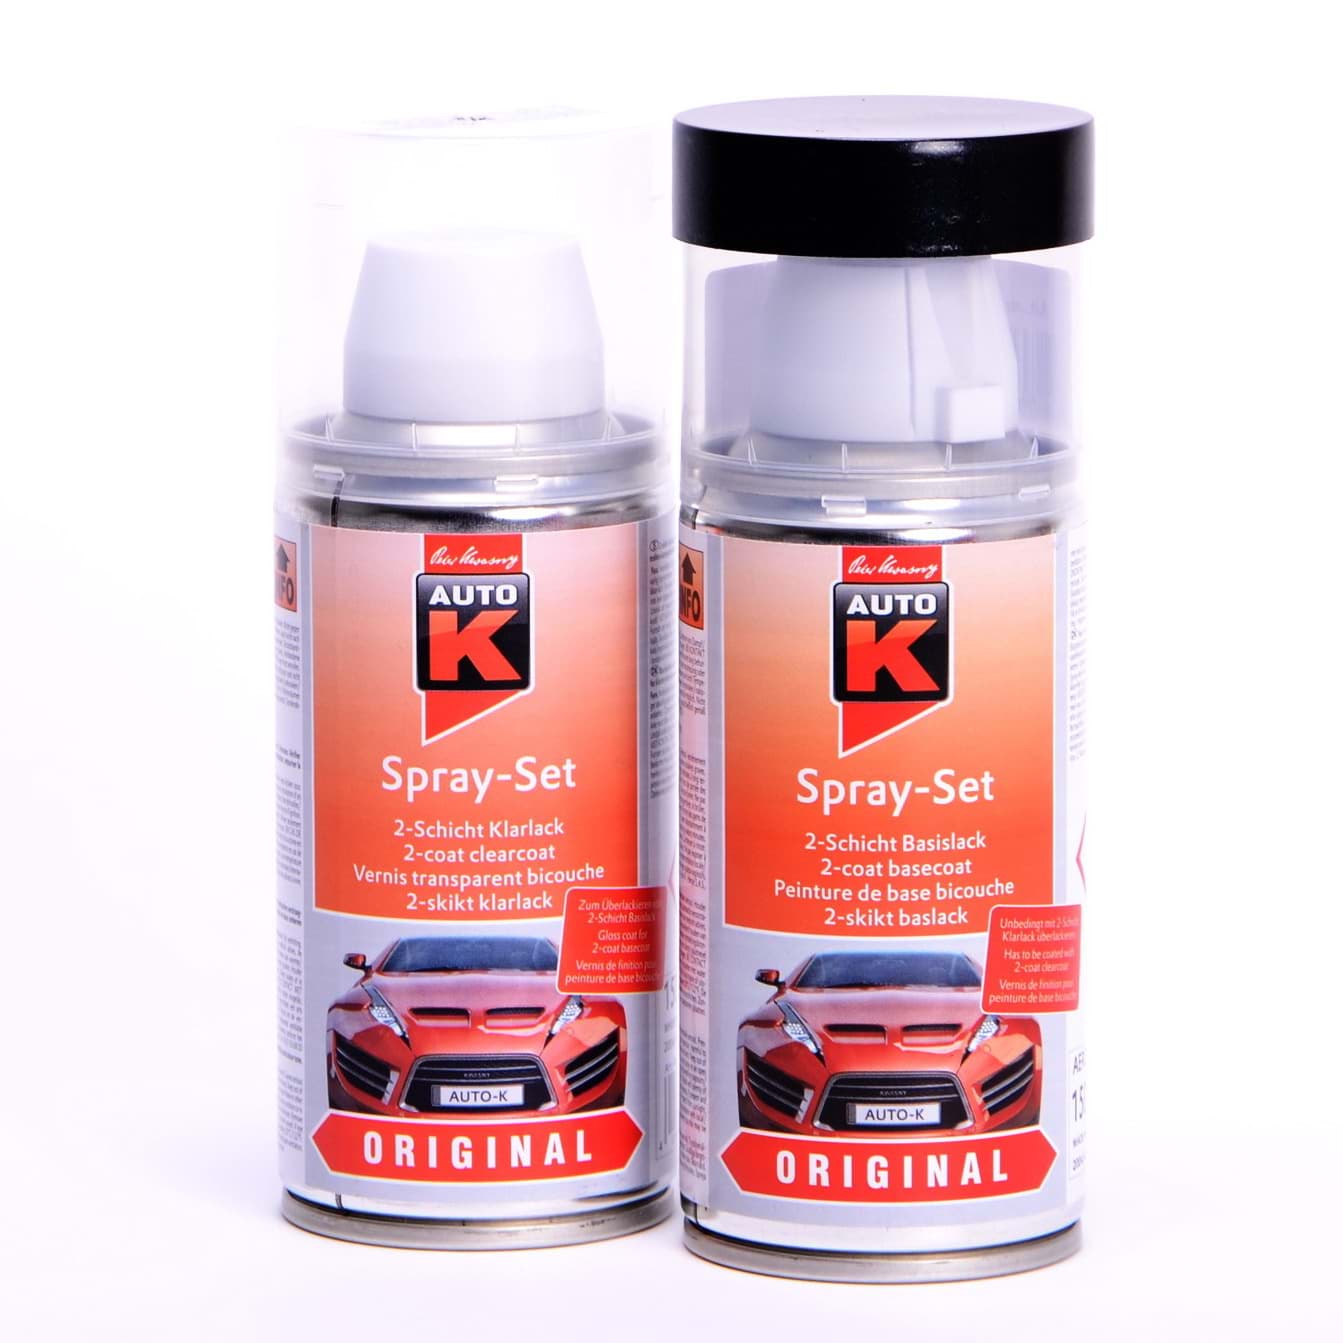 Auto-K Spray-Set Autolack für Opel 283 nautilusblau met 21389 resmi